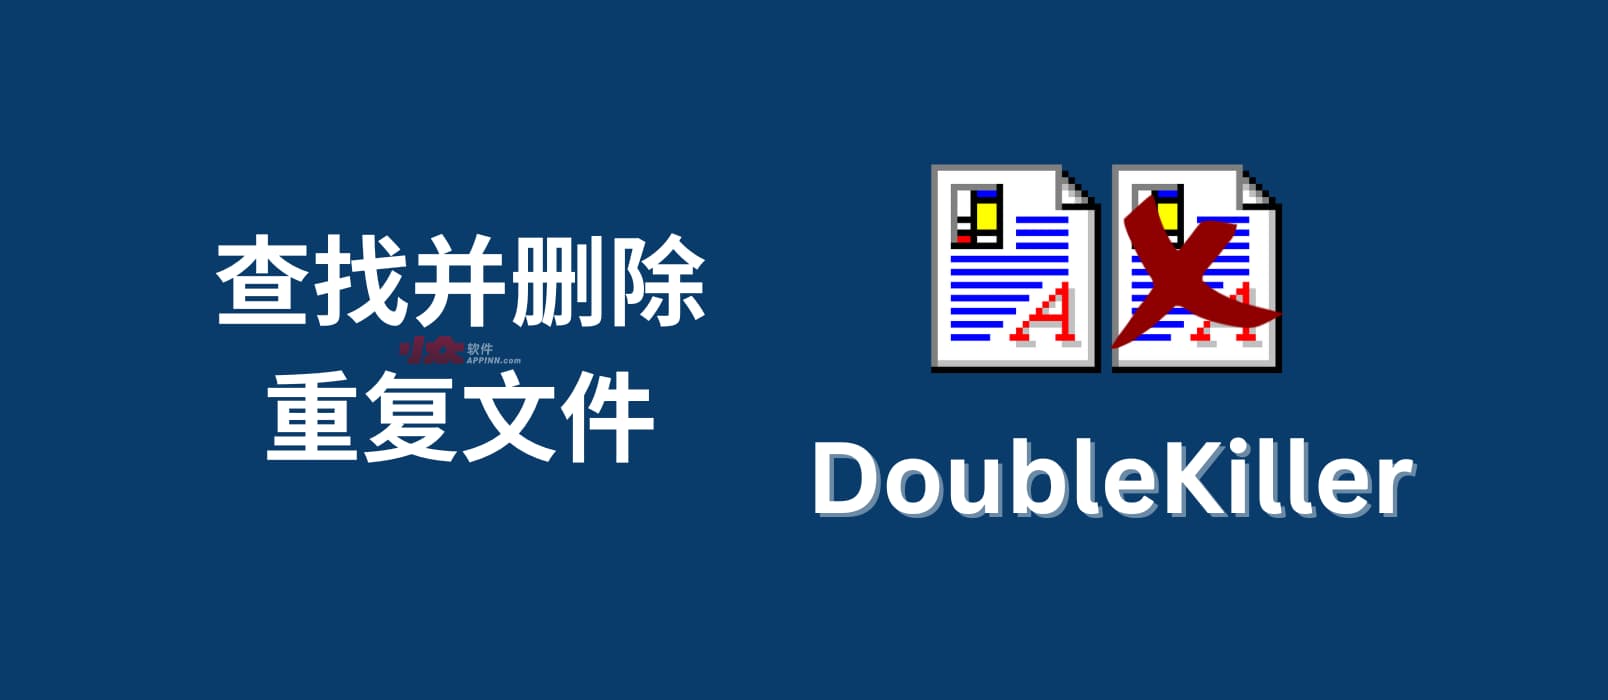 DoubleKiller - 查找并删除重复文件[Windows] 1